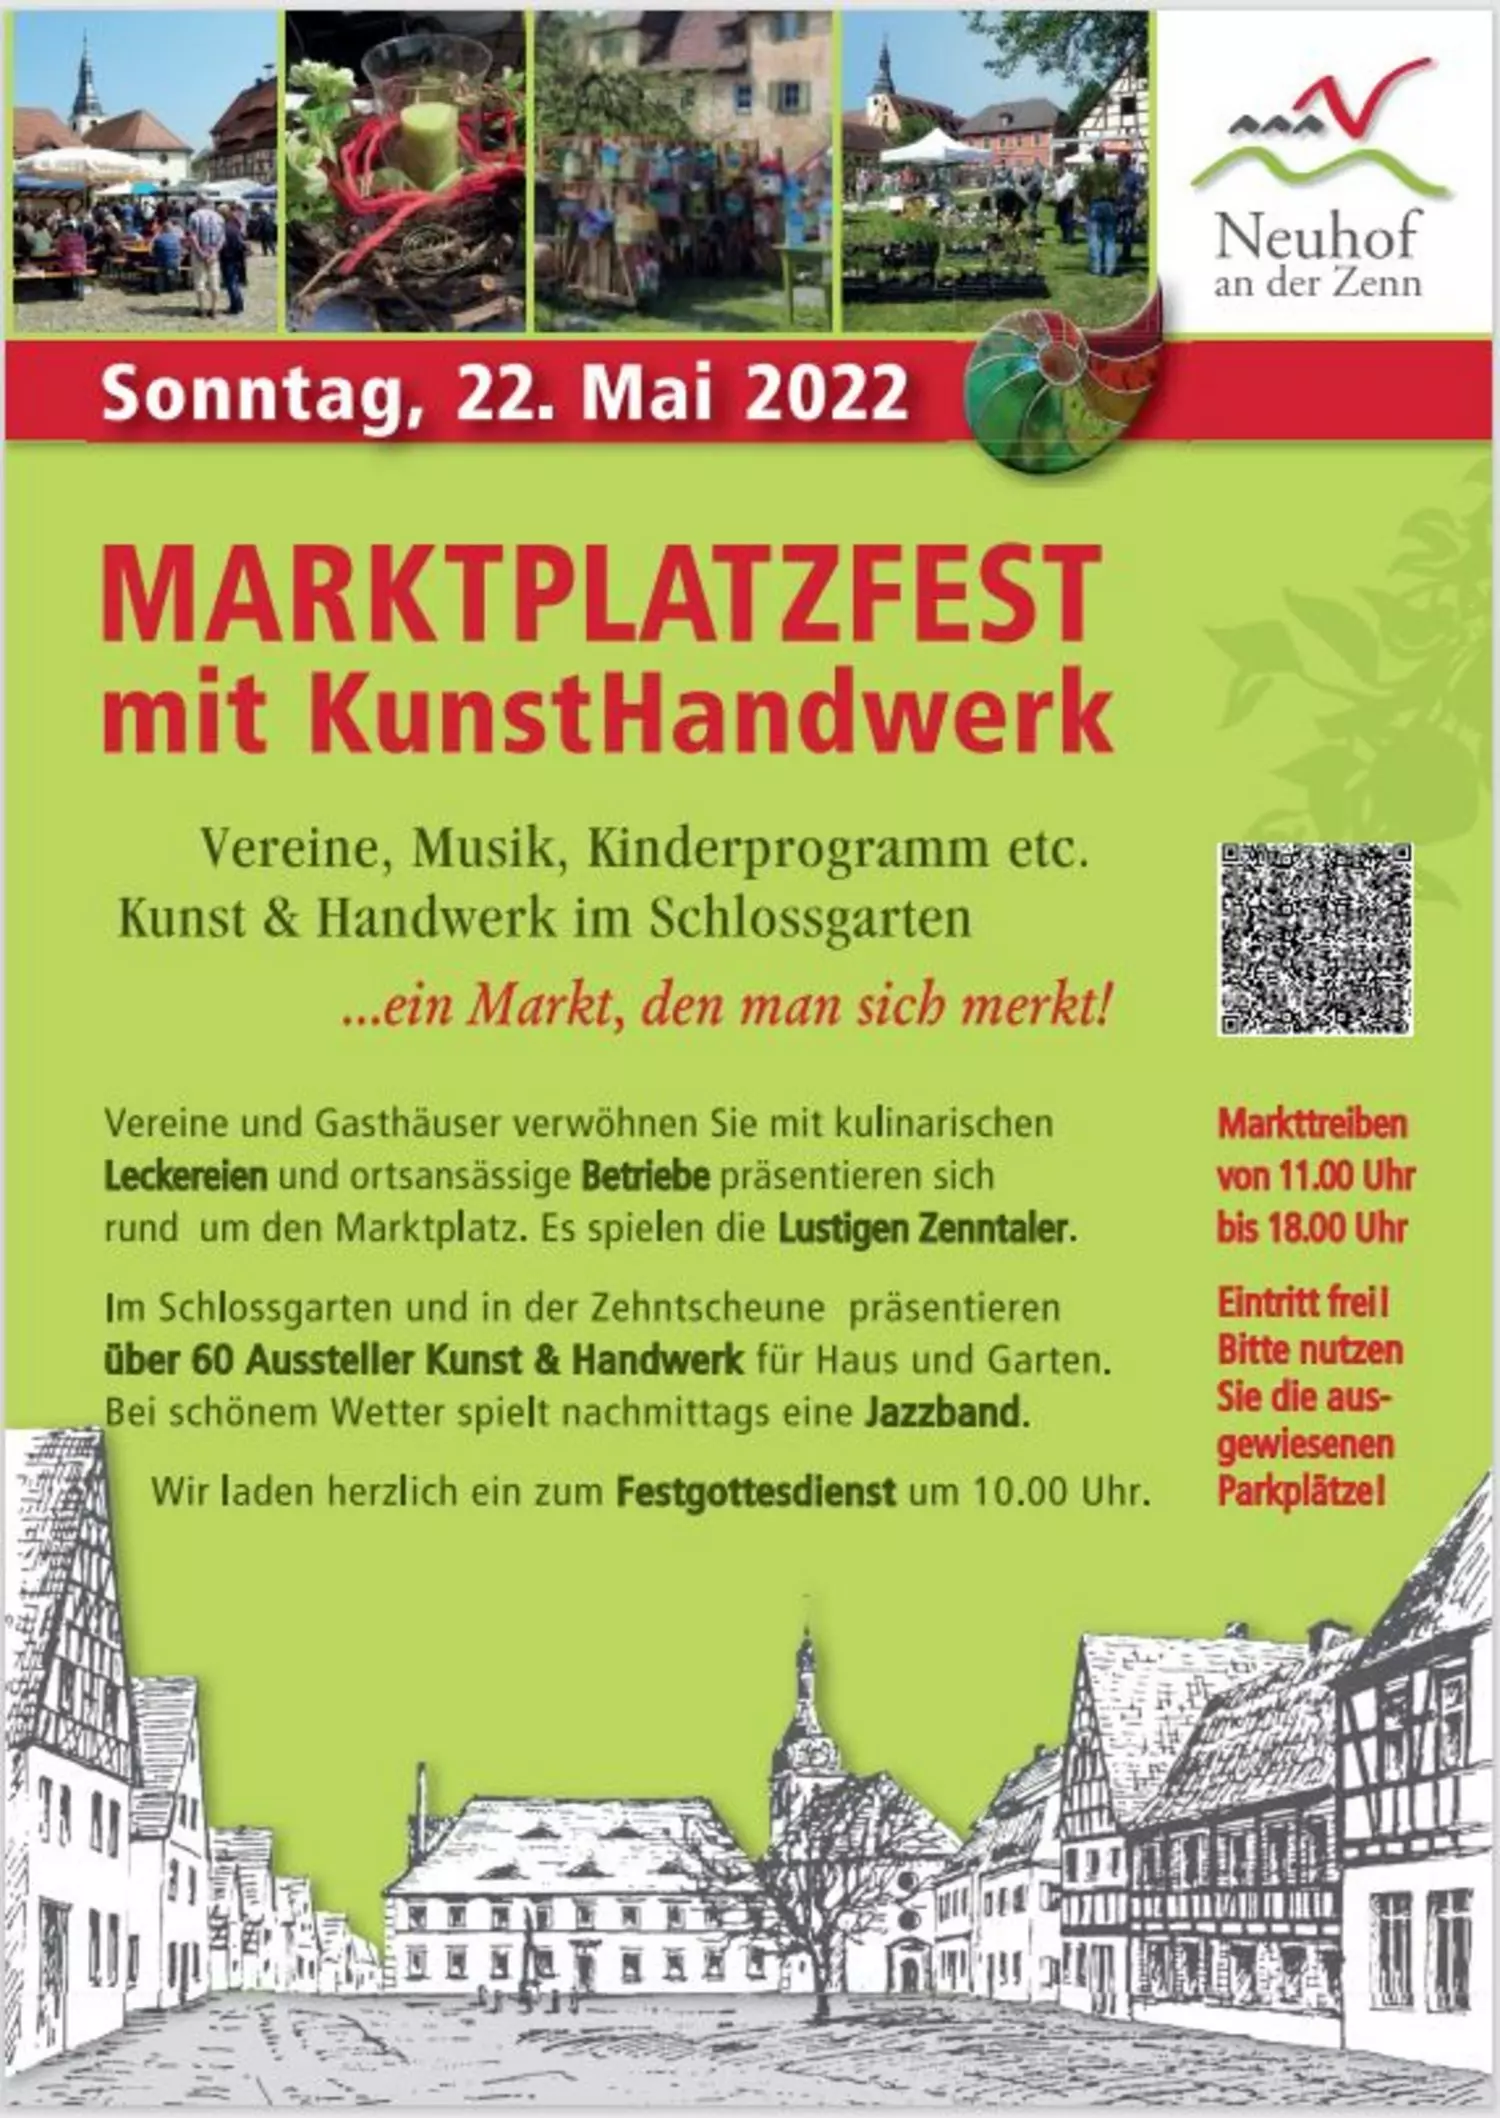 csm Marktplatzfest 2022 64442595e1